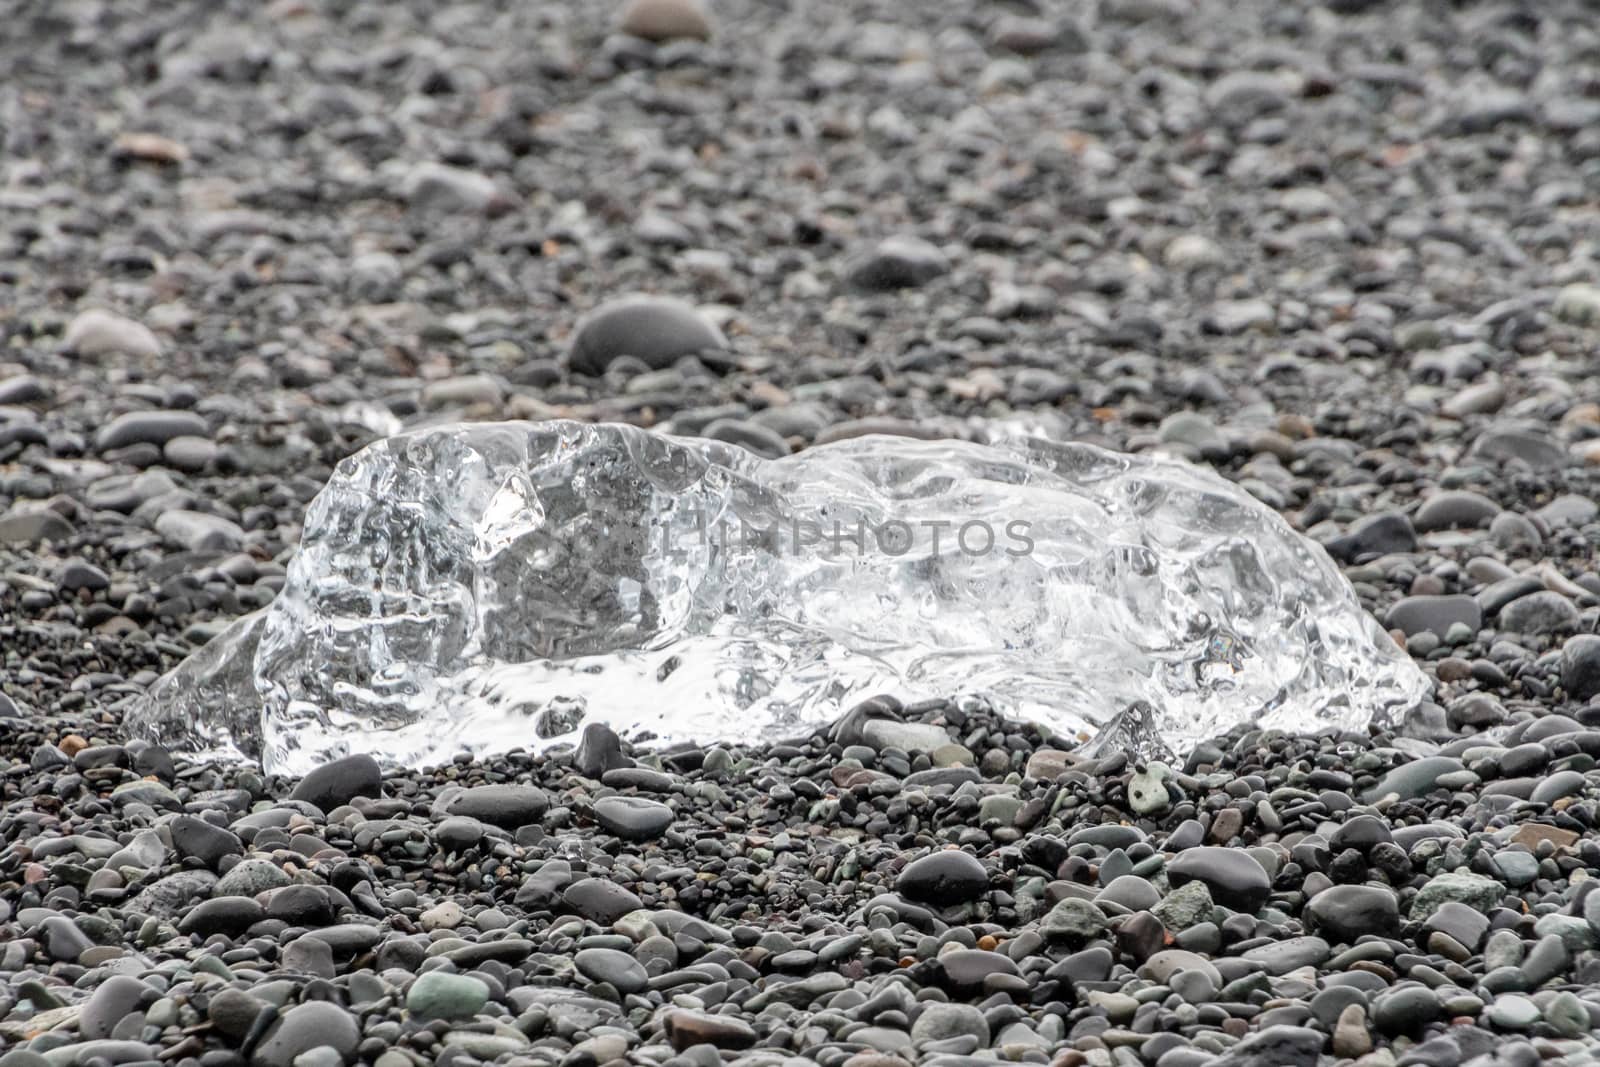 Diamond beach black sand crystal clear piece of ice lying on dark stones by MXW_Stock